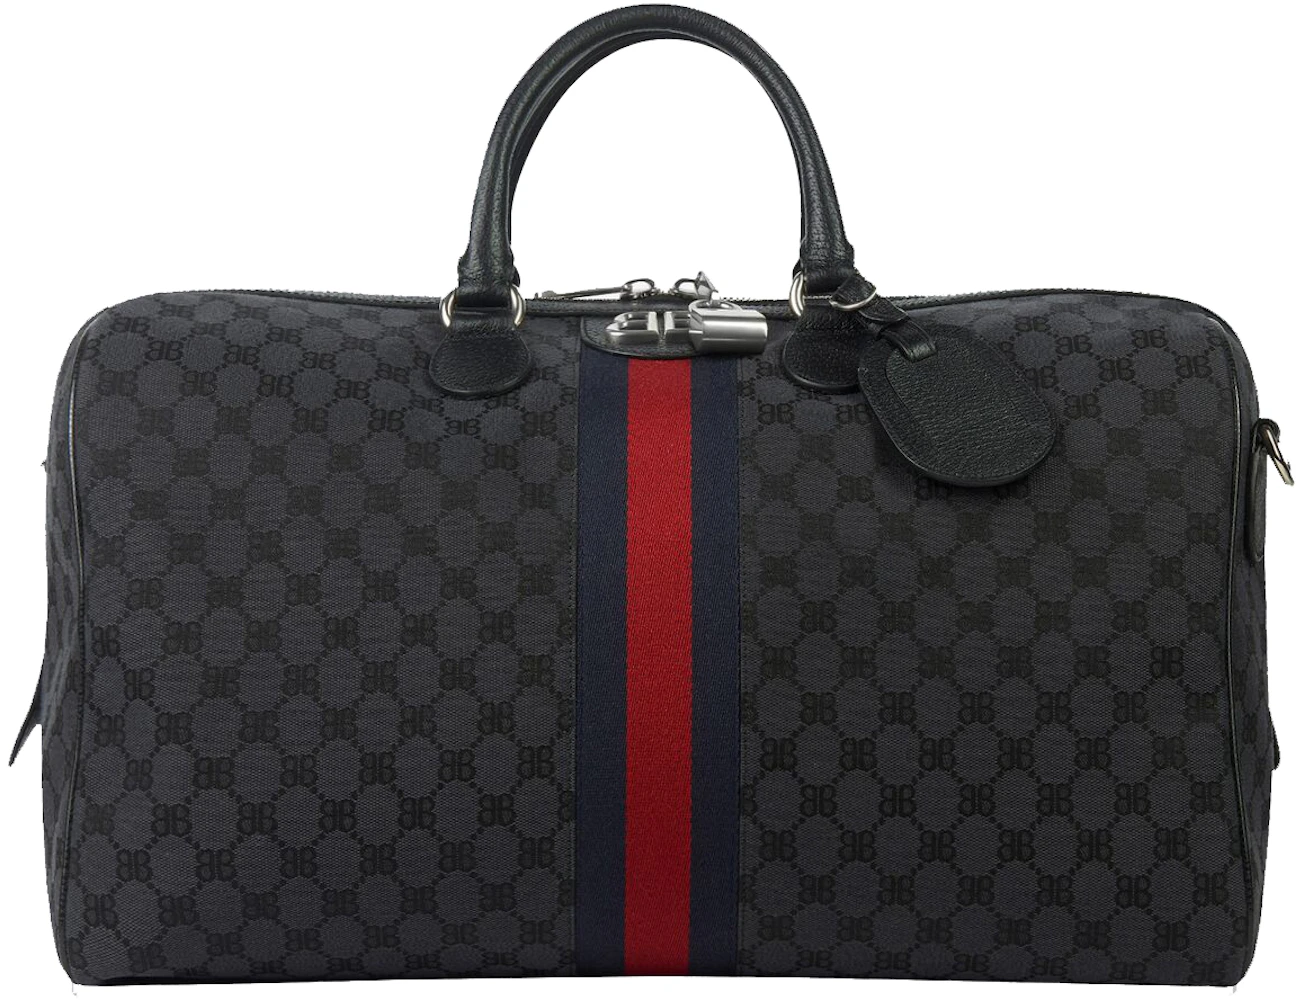 Gucci X Balenciaga The Hacker Project Medium Neo Classic Bag Variation 2  Beige/Ebony for Women